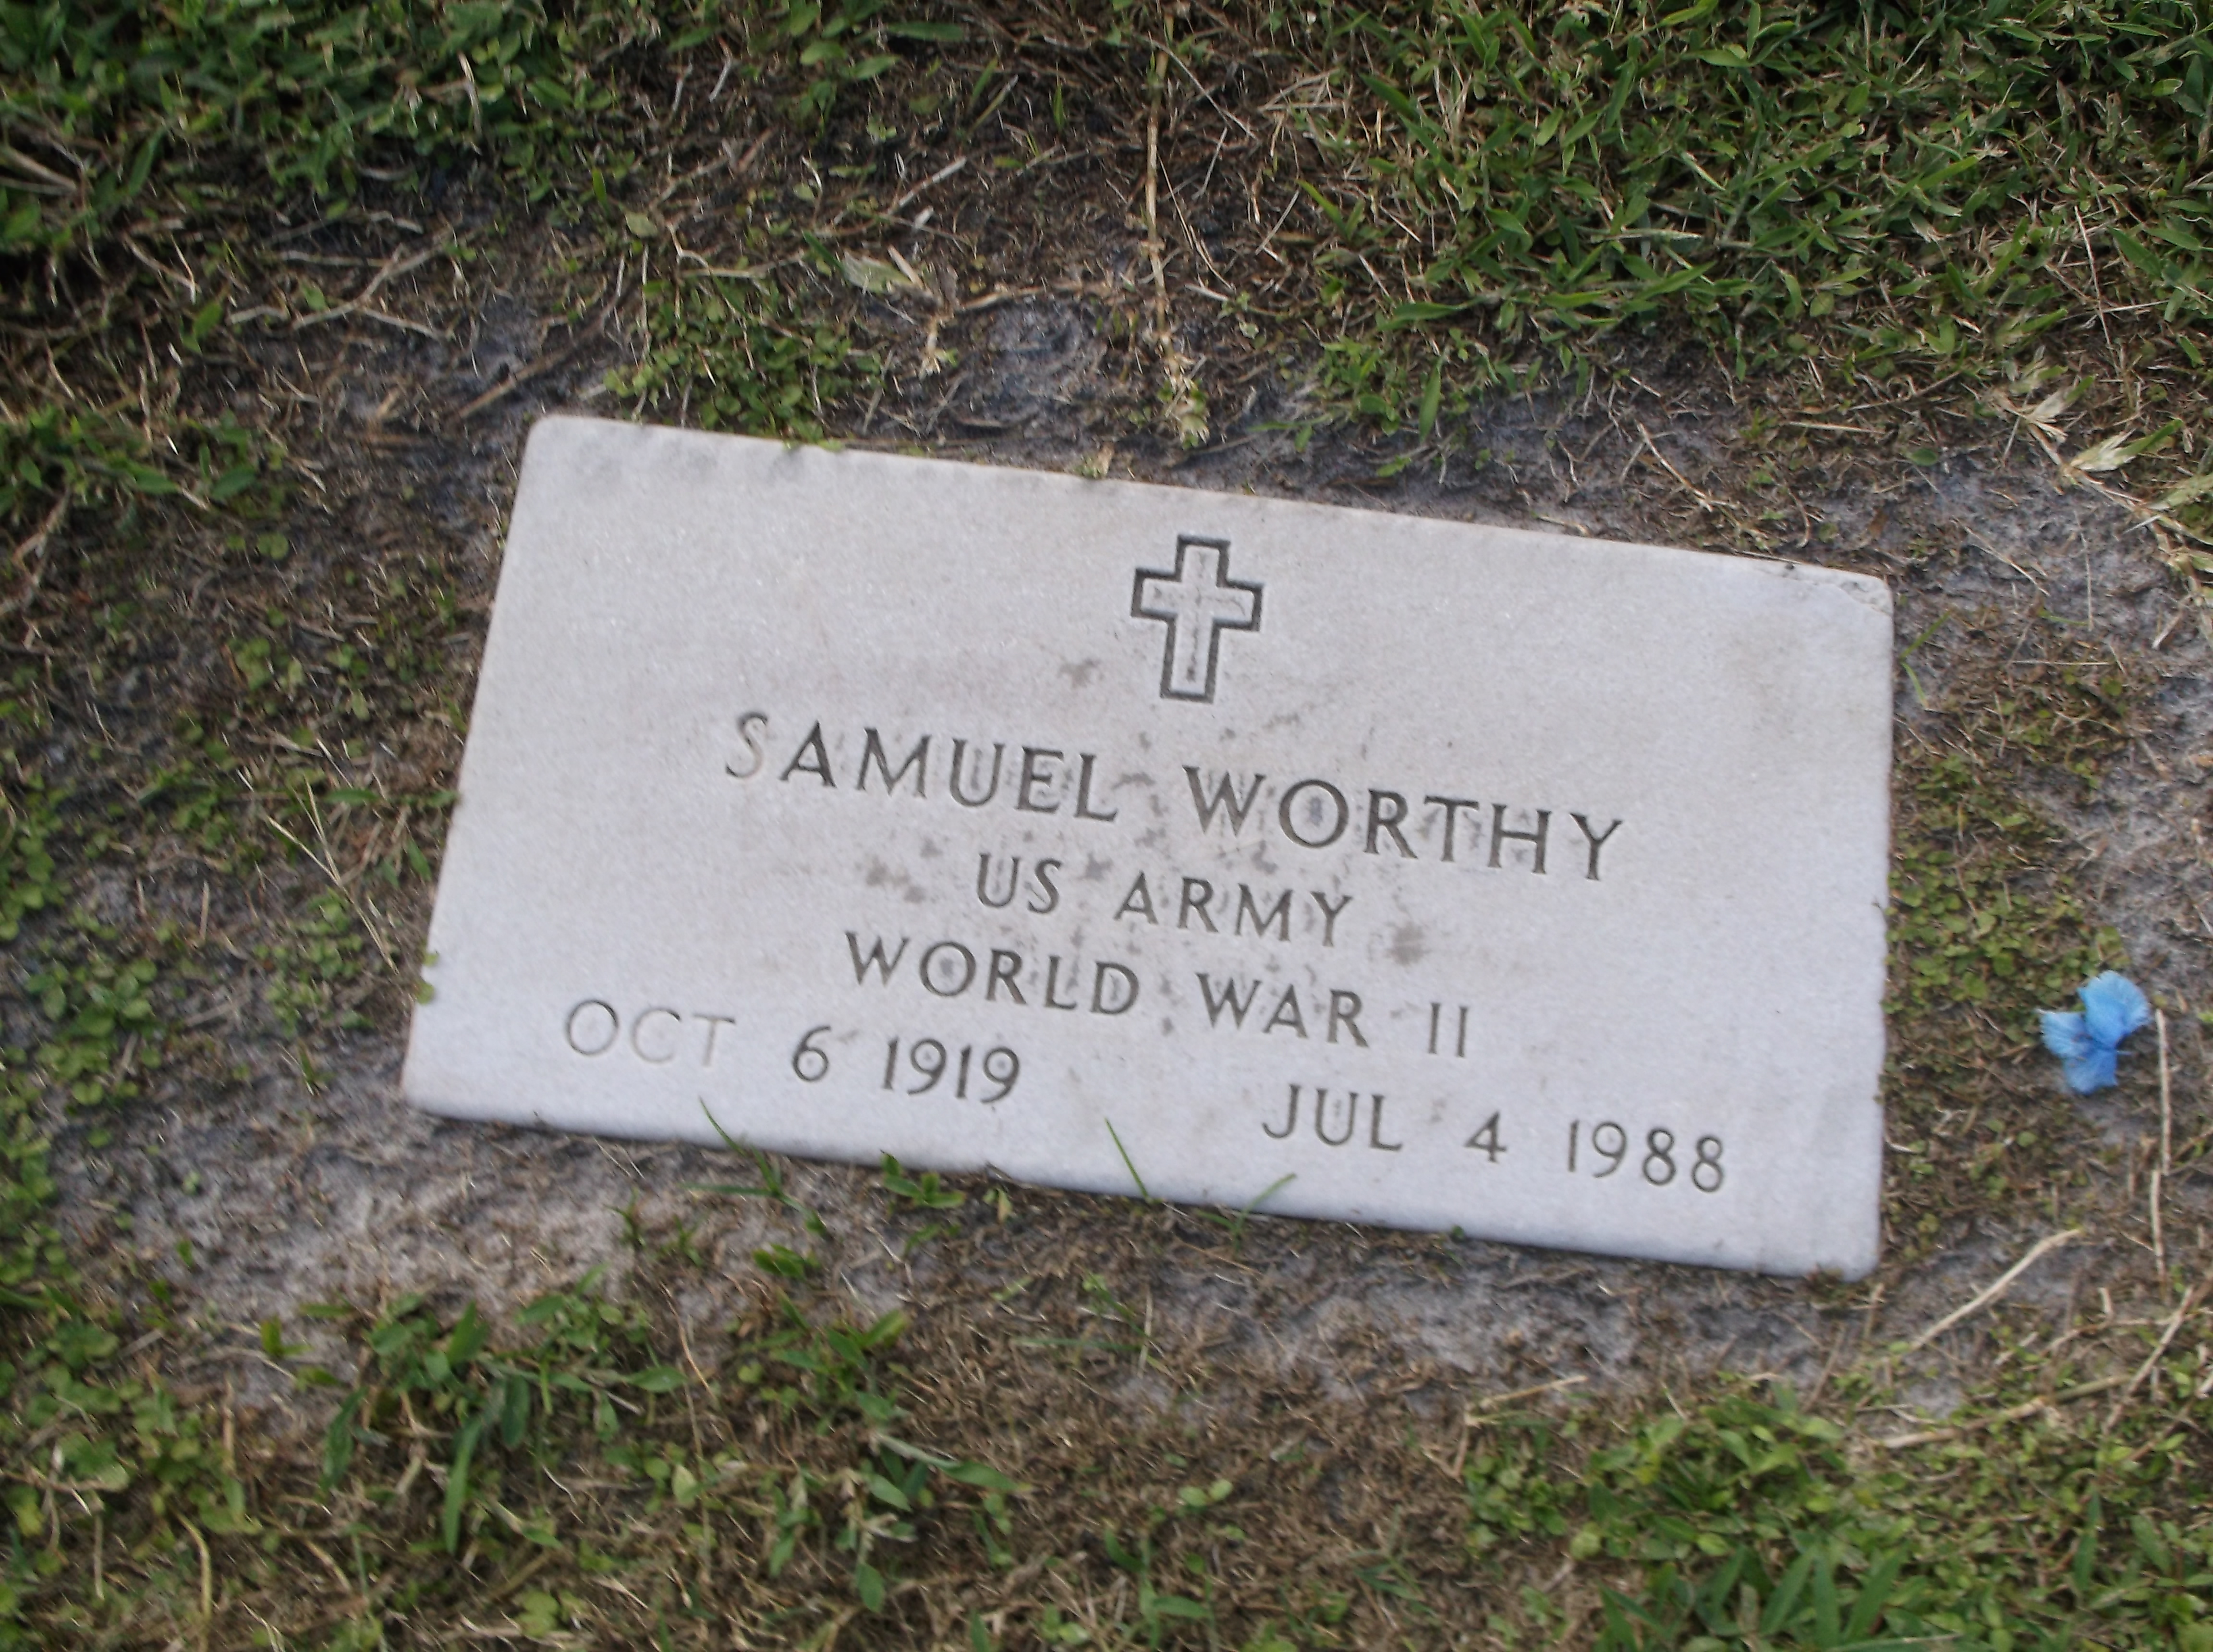 Samuel Worthy